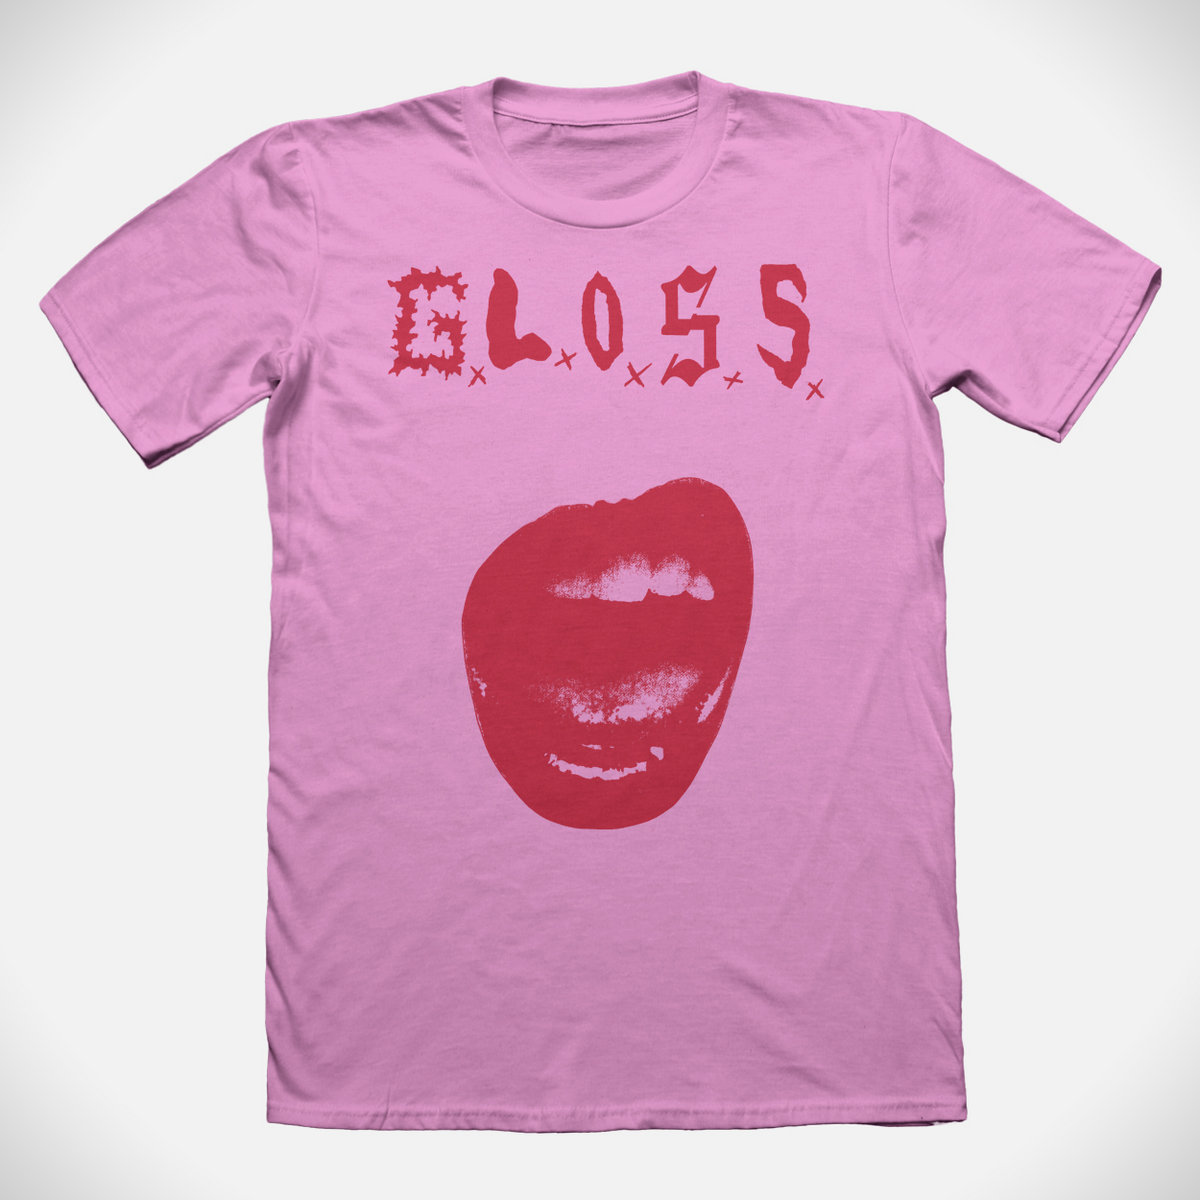 G.L.O.S.S – LIPS SHIRT | sabotagerecords